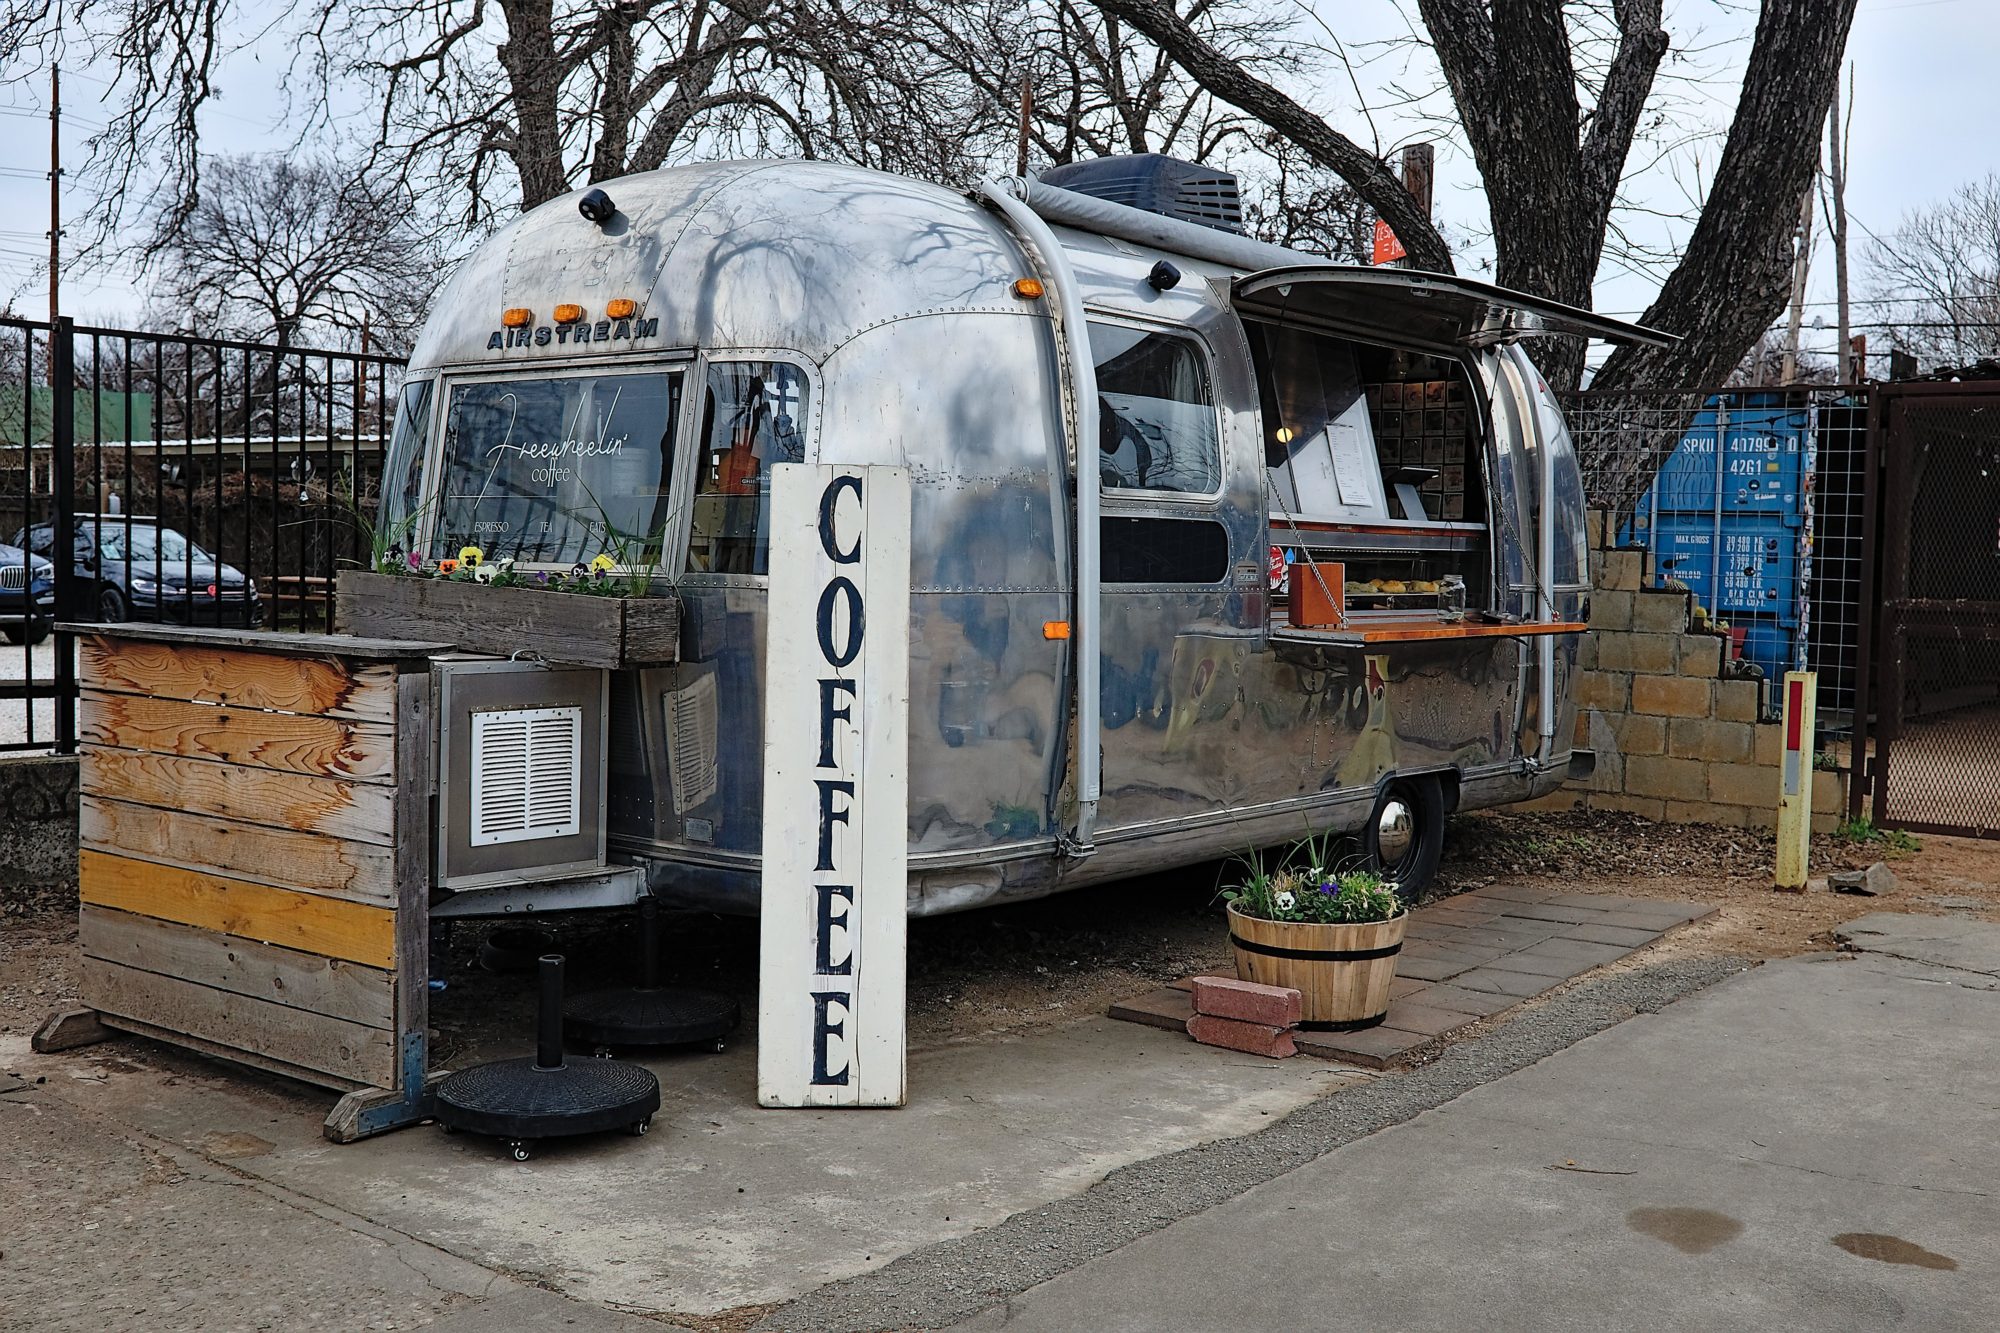 An Airstream trailer that is a coffee shop